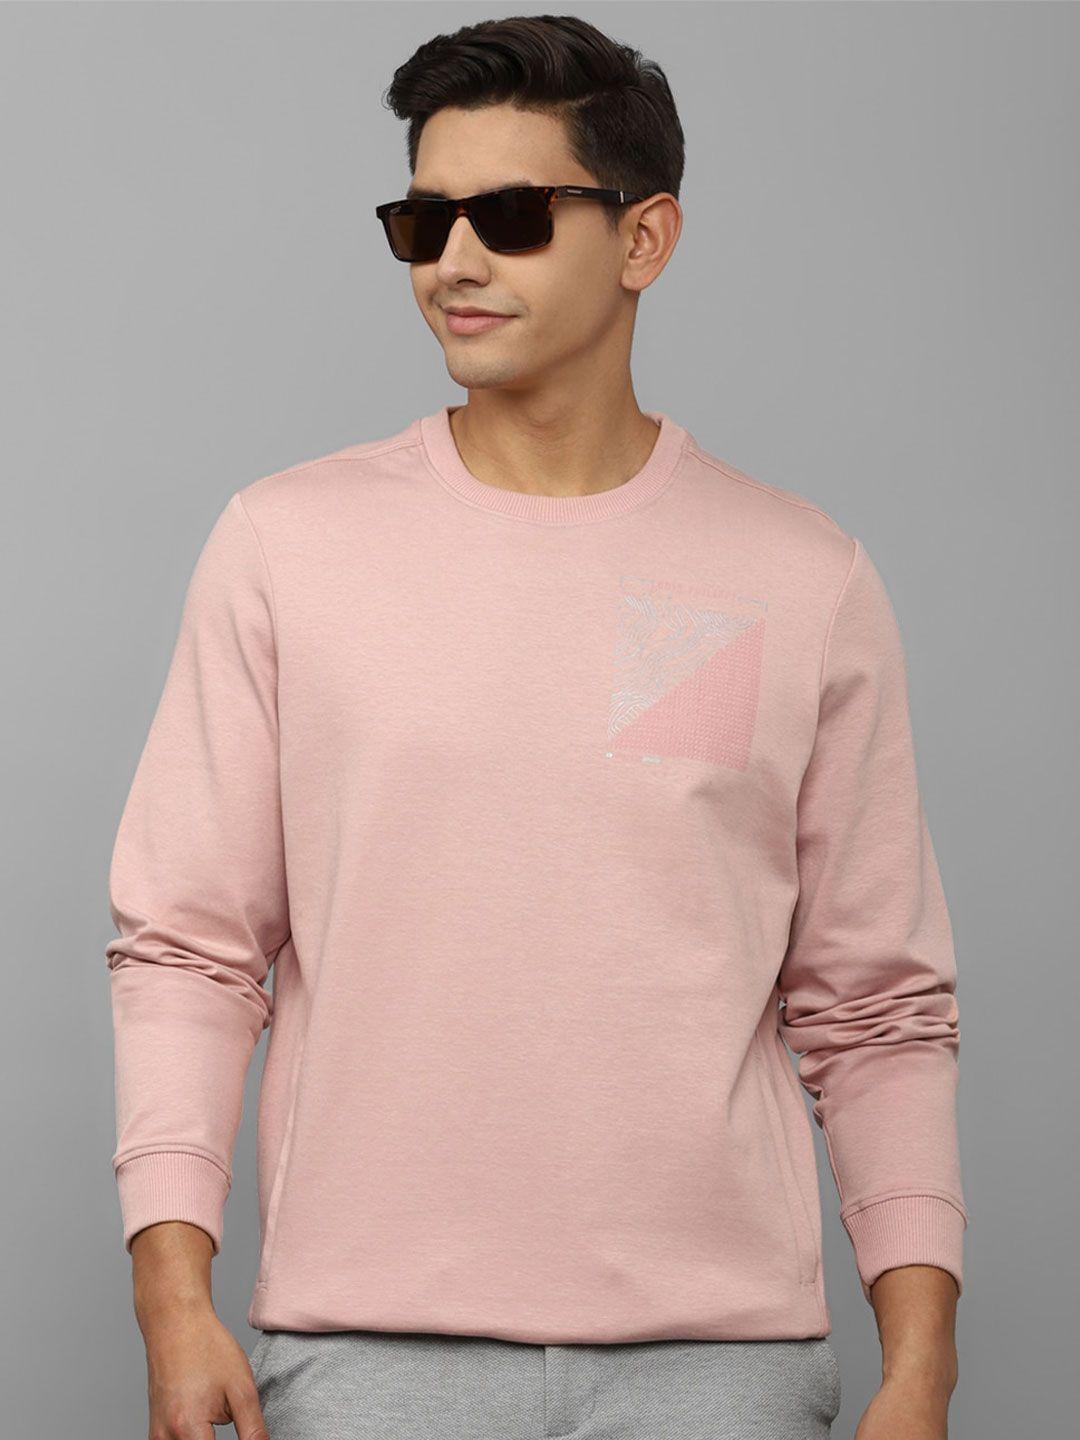 louis-philippe-sport-men-pink-cotton-sweatshirt